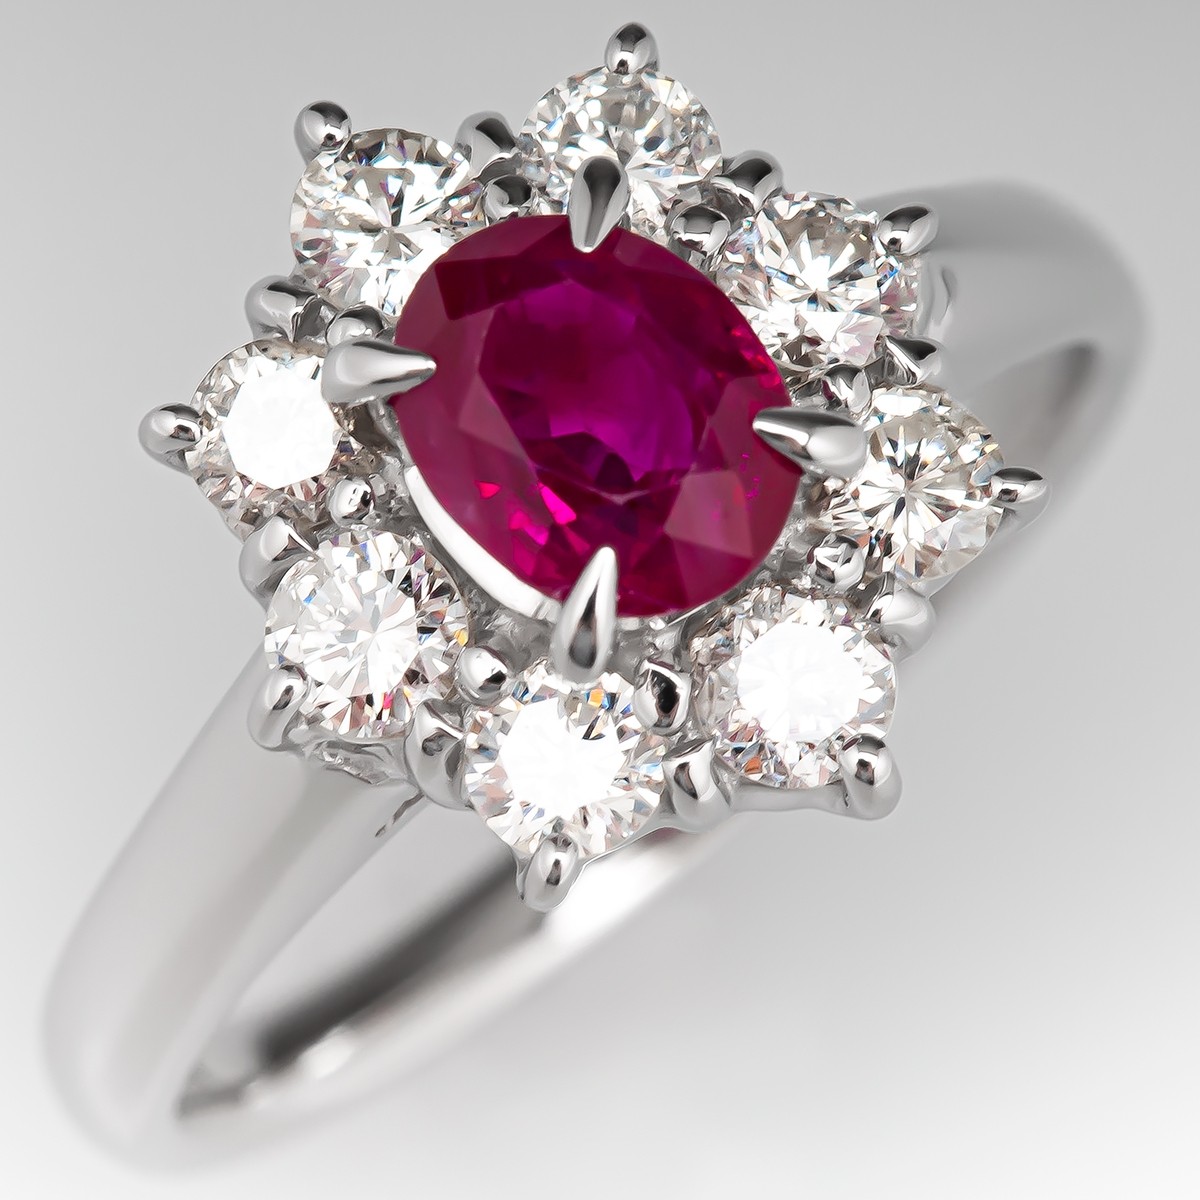 1 Carat Ruby Engagement Ring w/ Diamond Halo in Platinum